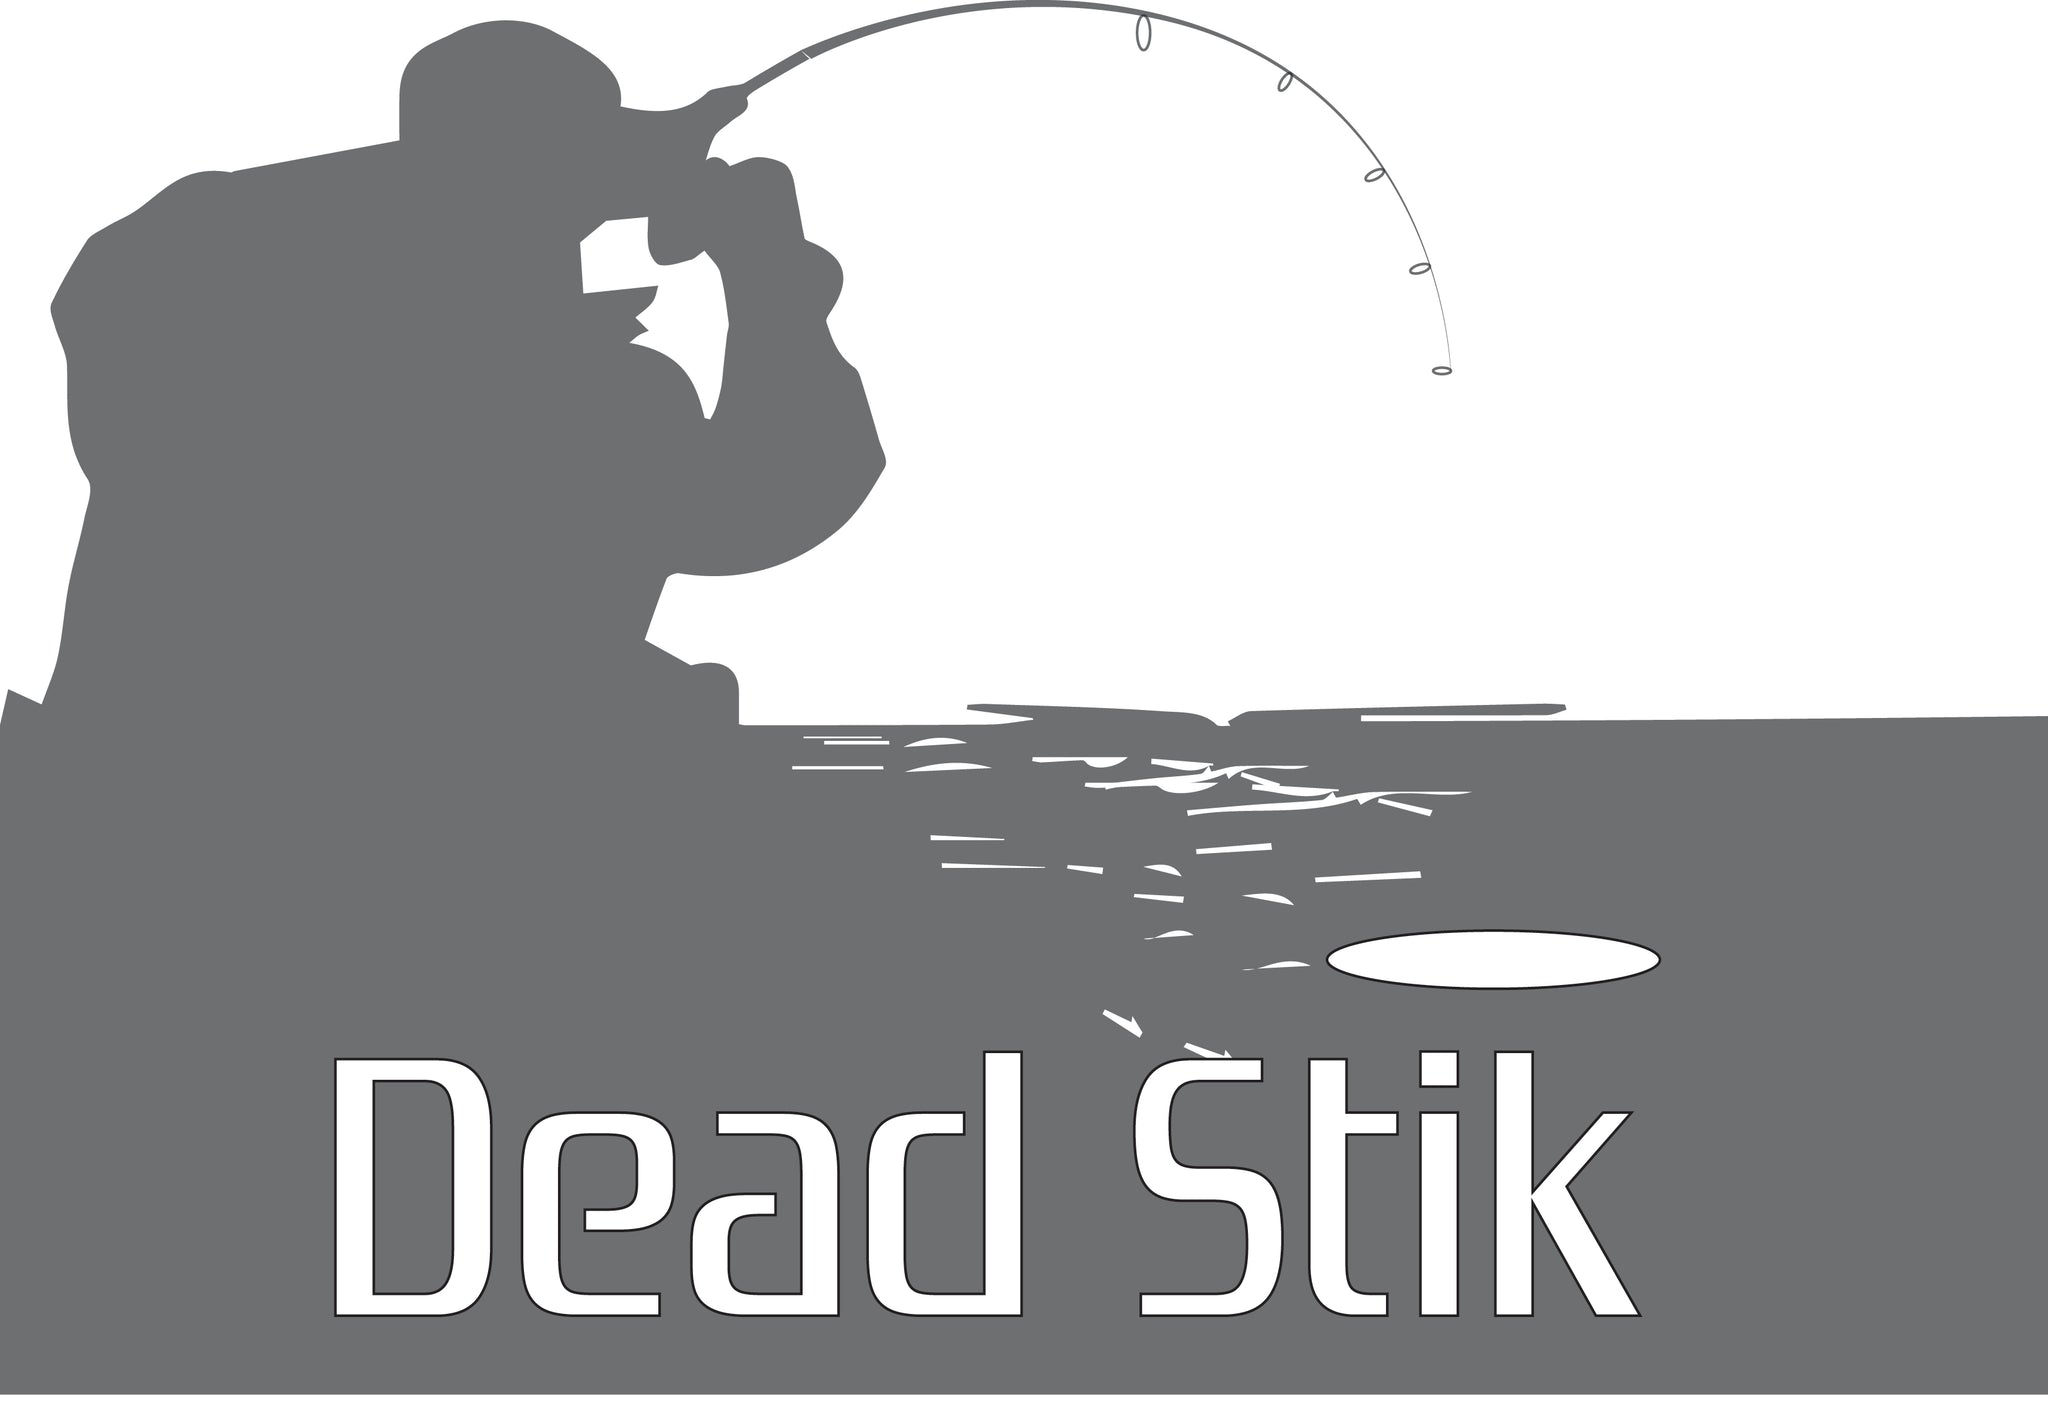 Dead stick ice rod